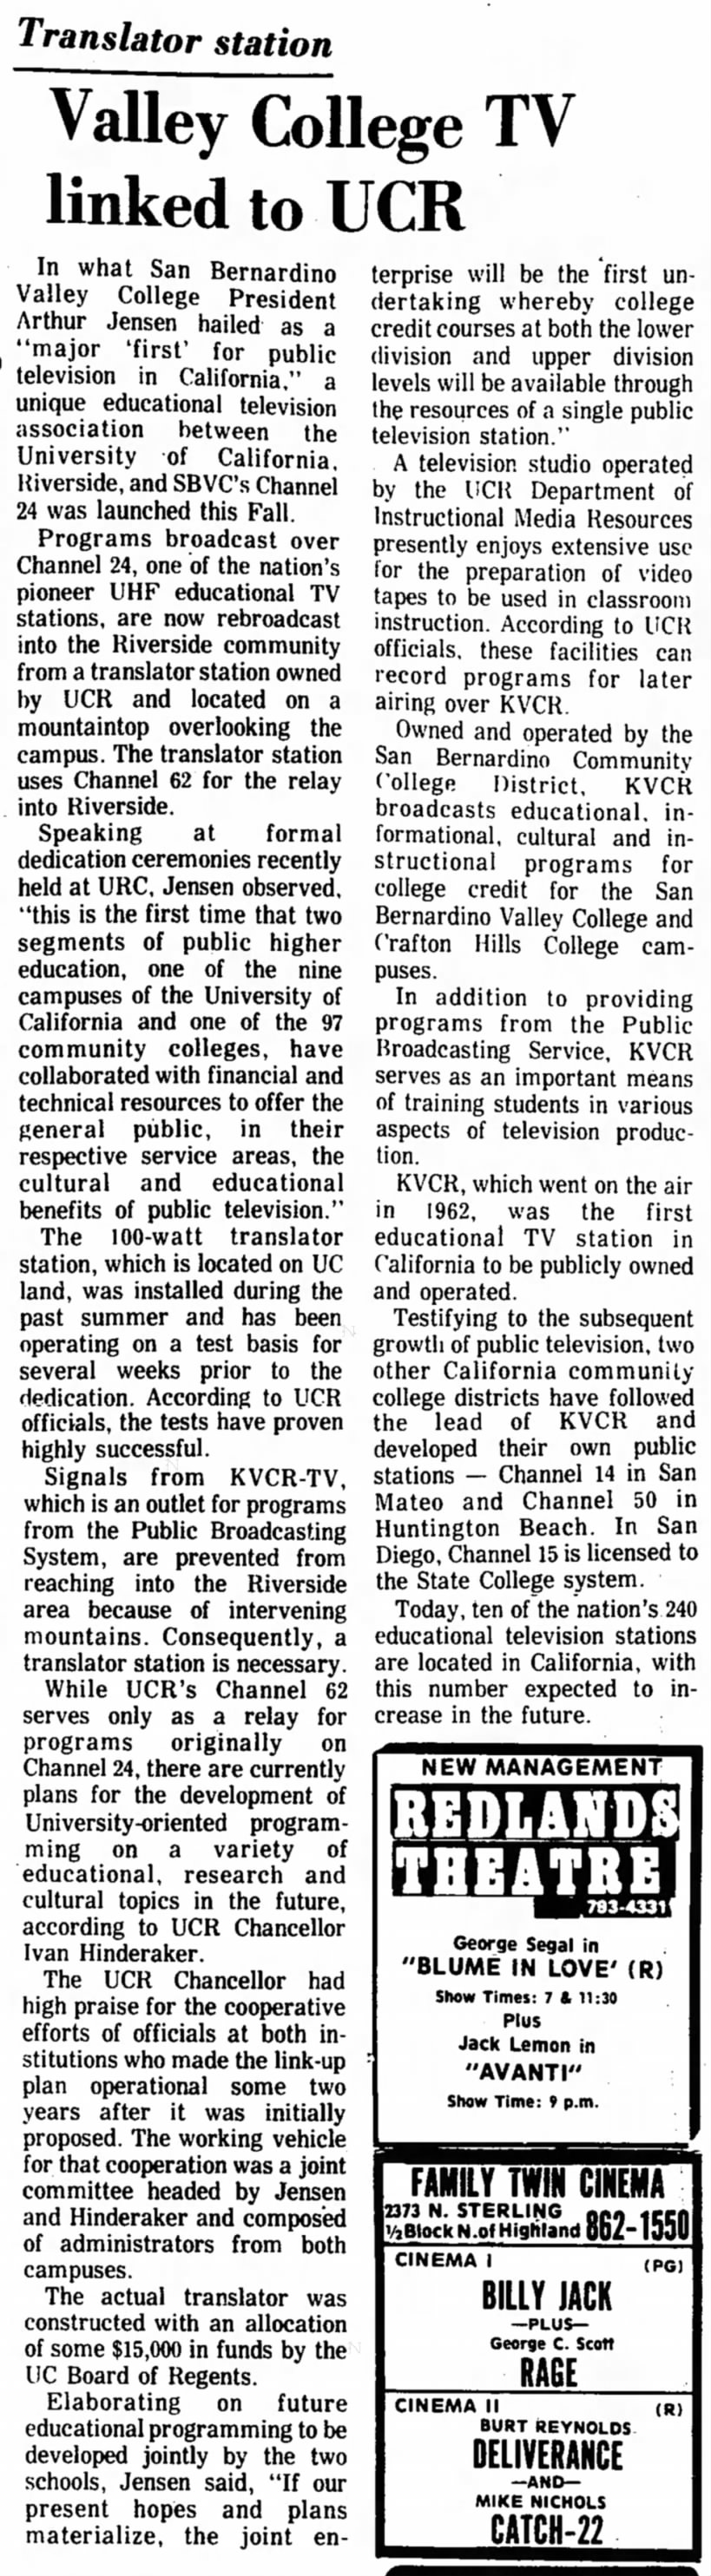 Translator station: Valley College TV linked to UCR